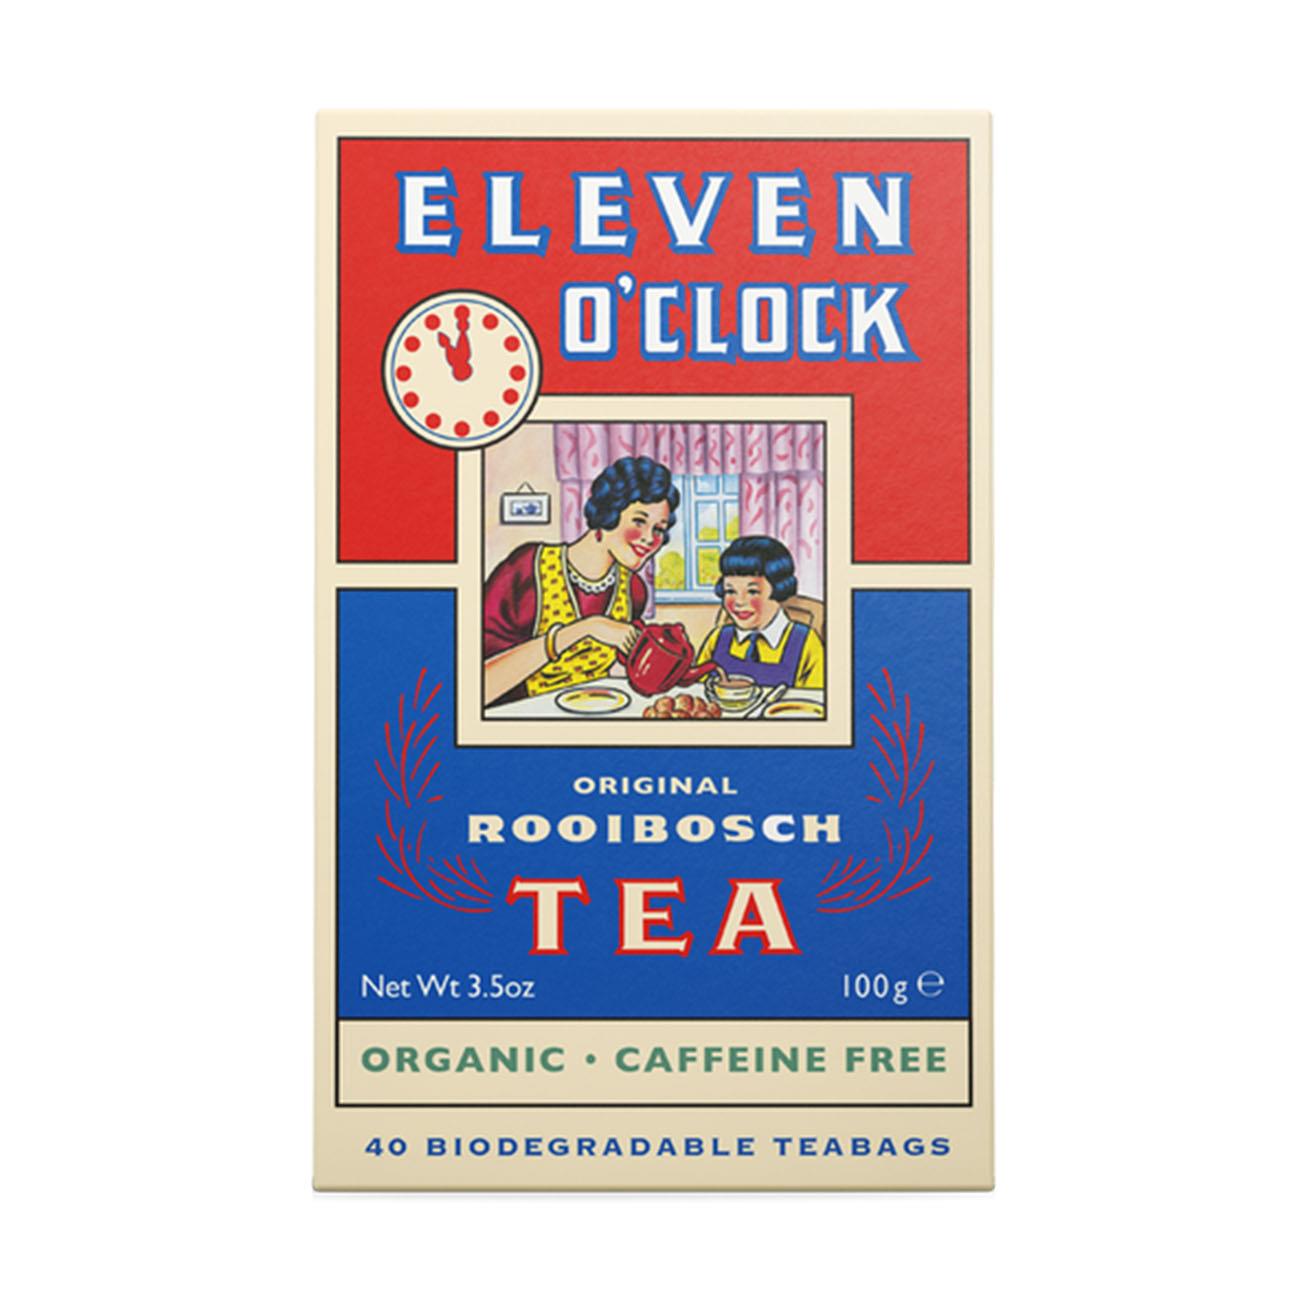 Eleven O'clock Organic Rooibosch Tea 40 bags